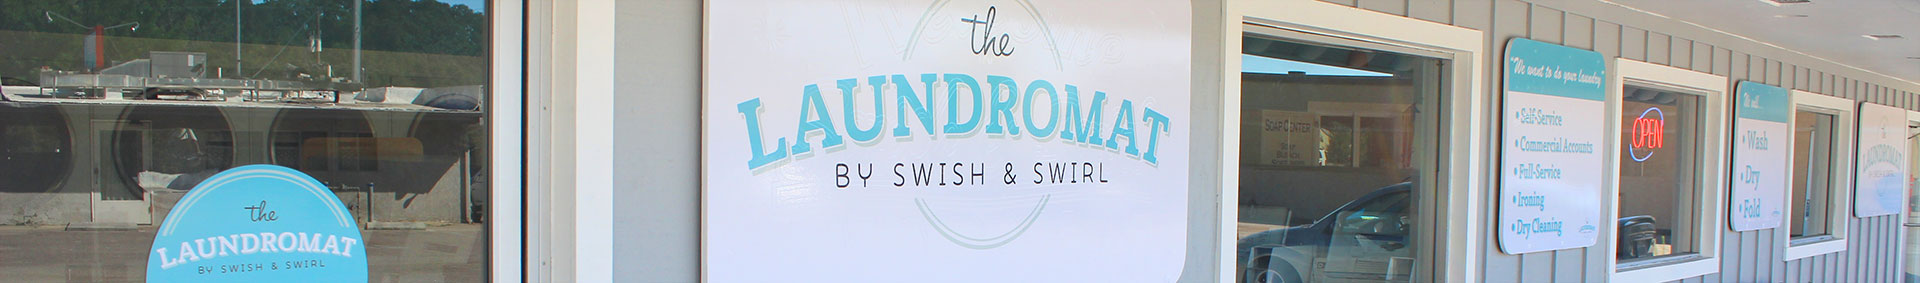 Laundromat Atascadero Laundry Services - Wash and Fold - Business Laundry - Swish and Swirl Laundromat